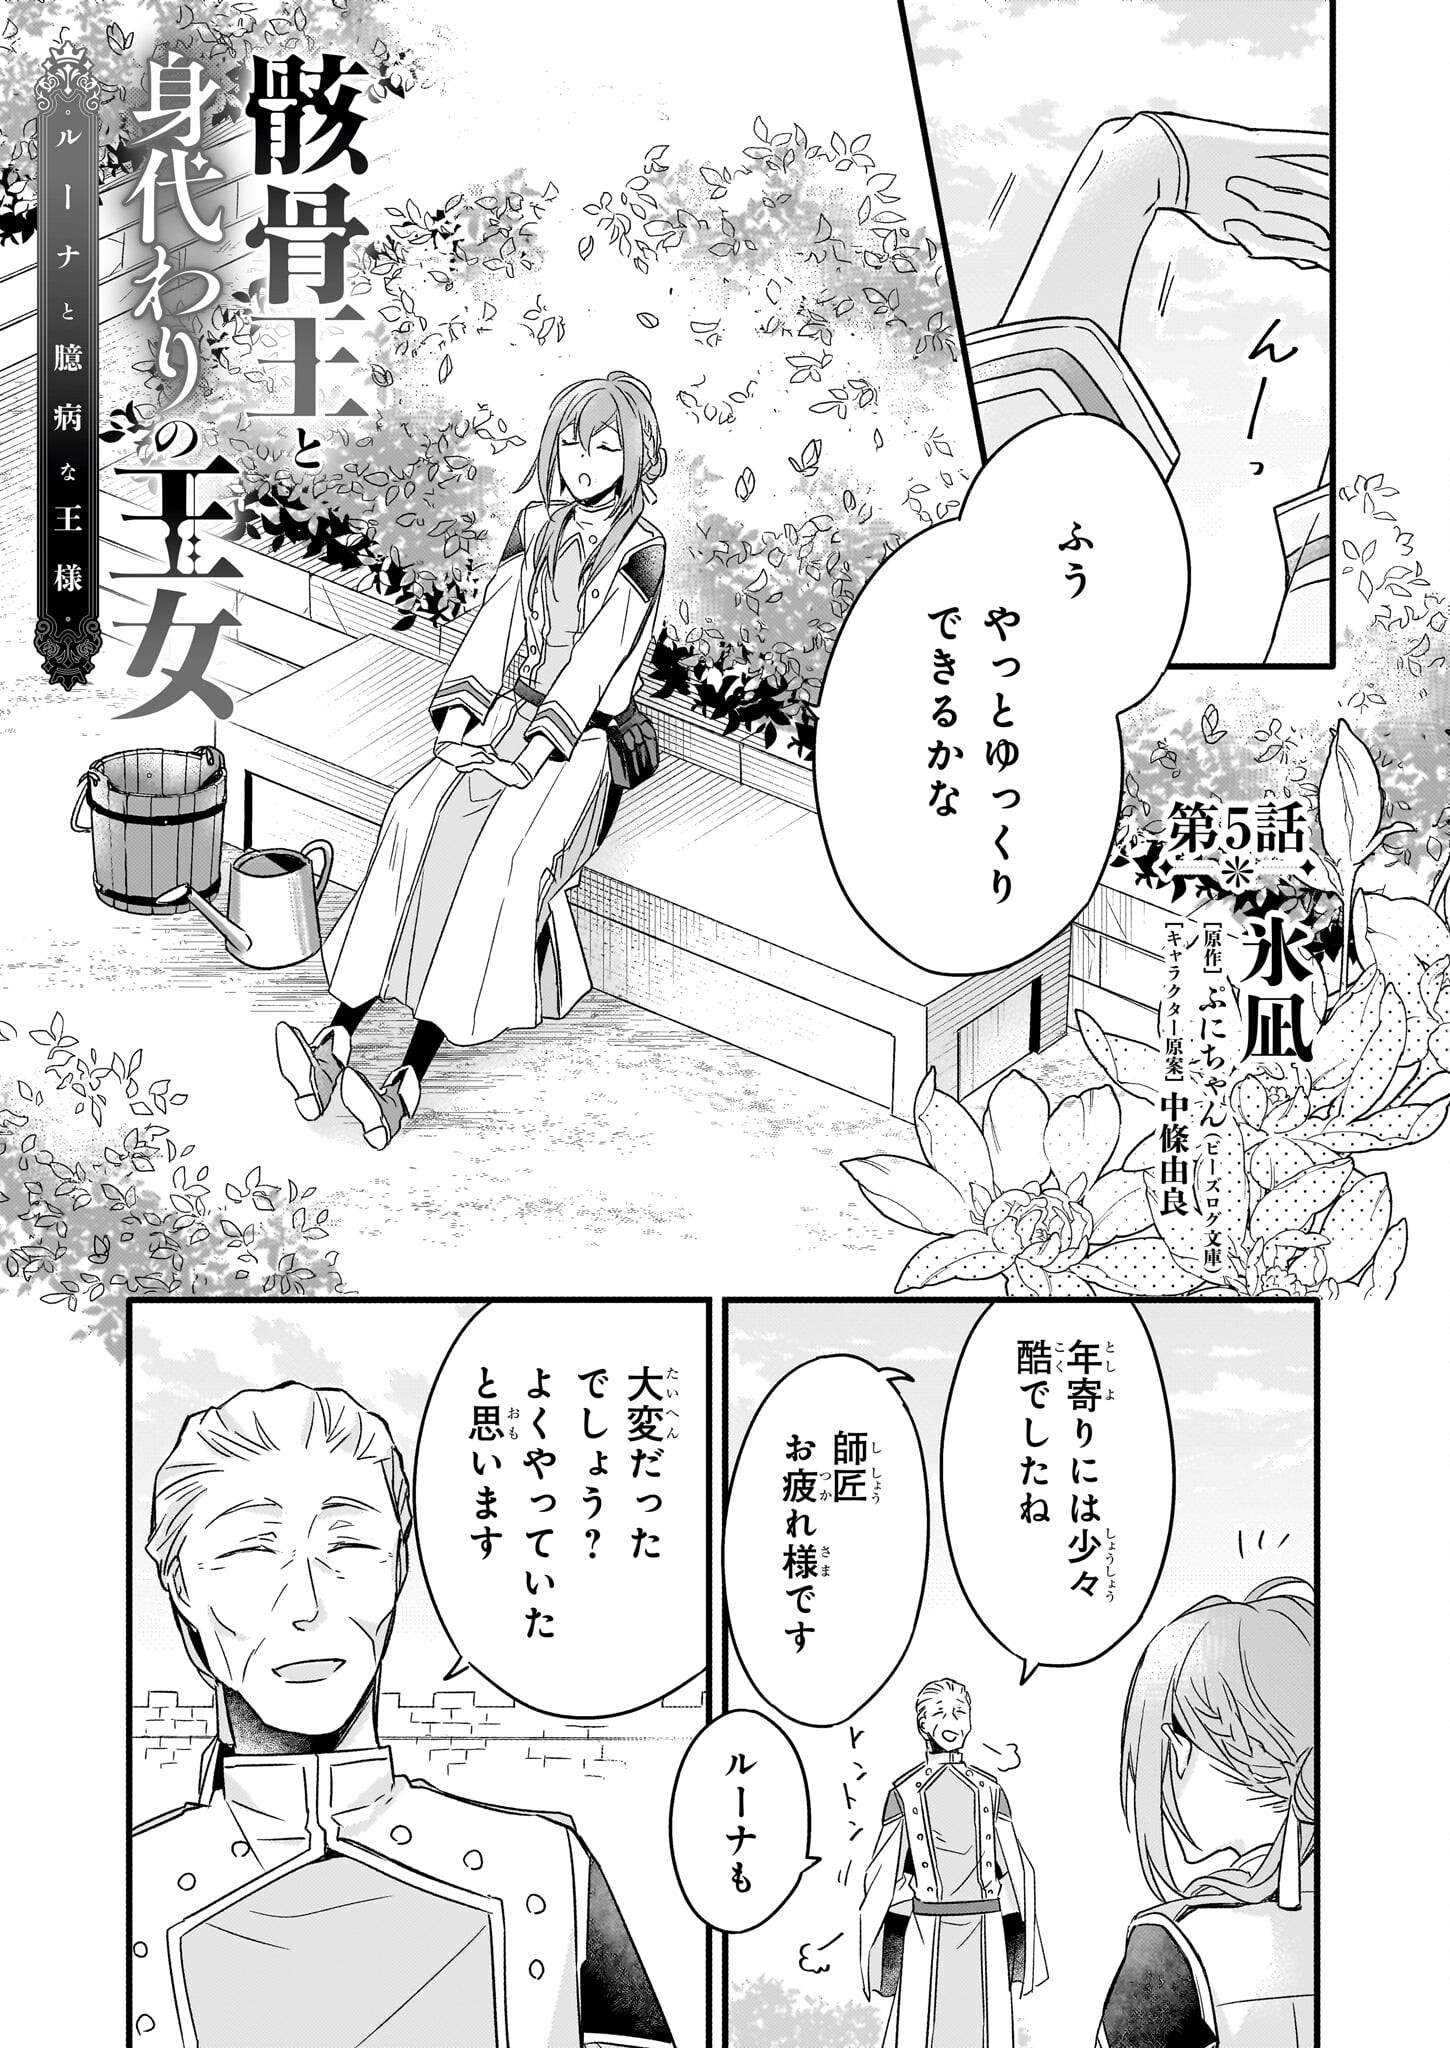 Gaikotsu Ou to Migawari no Oujo – Luna to Okubyou na Ousama - Chapter 5 - Page 1